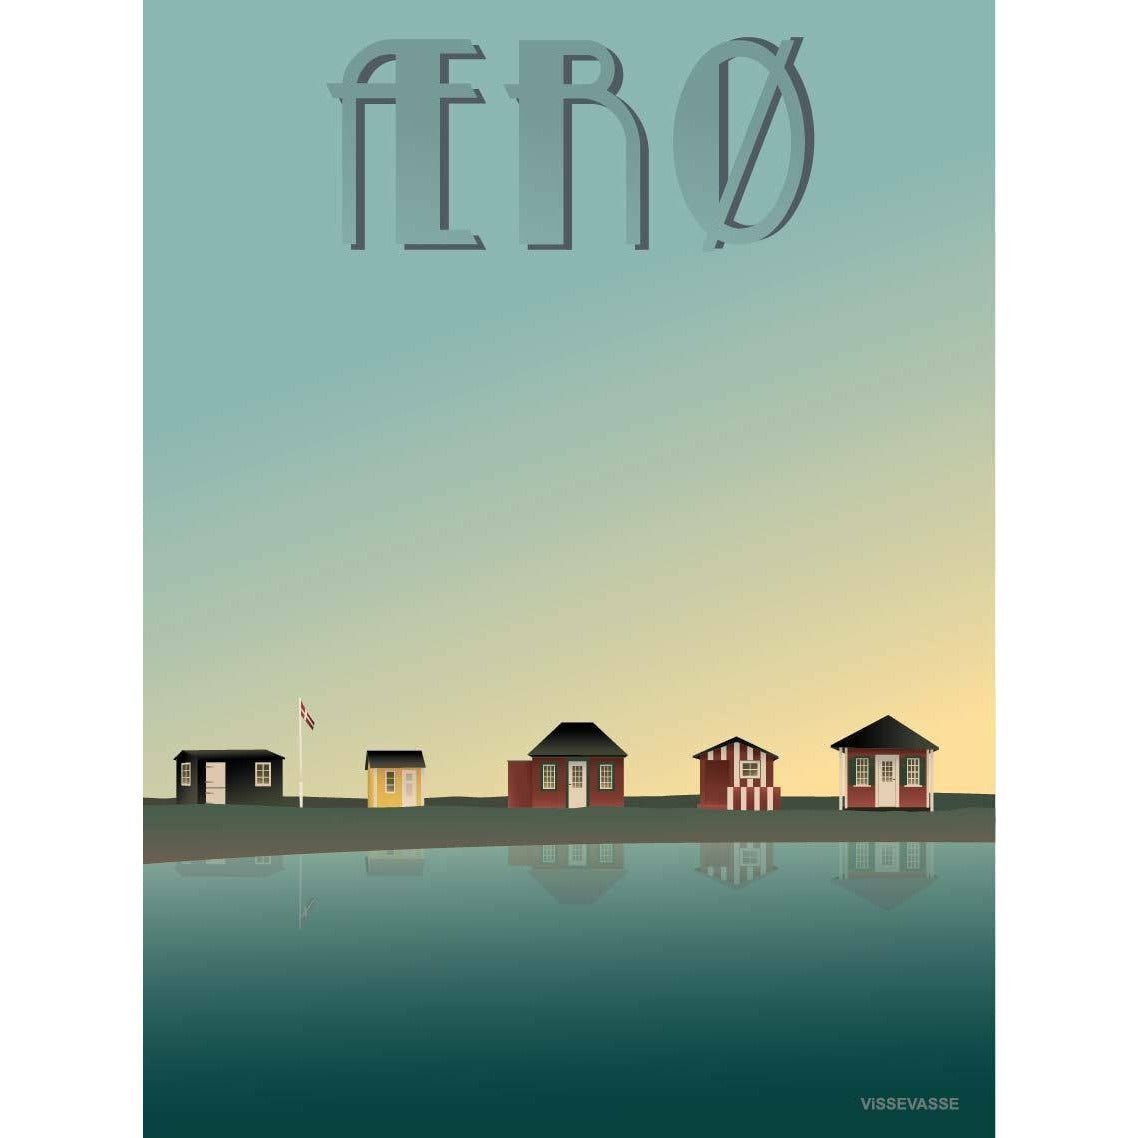 Vissevasse Ærø Beach Huts Poster, 30 x40 cm